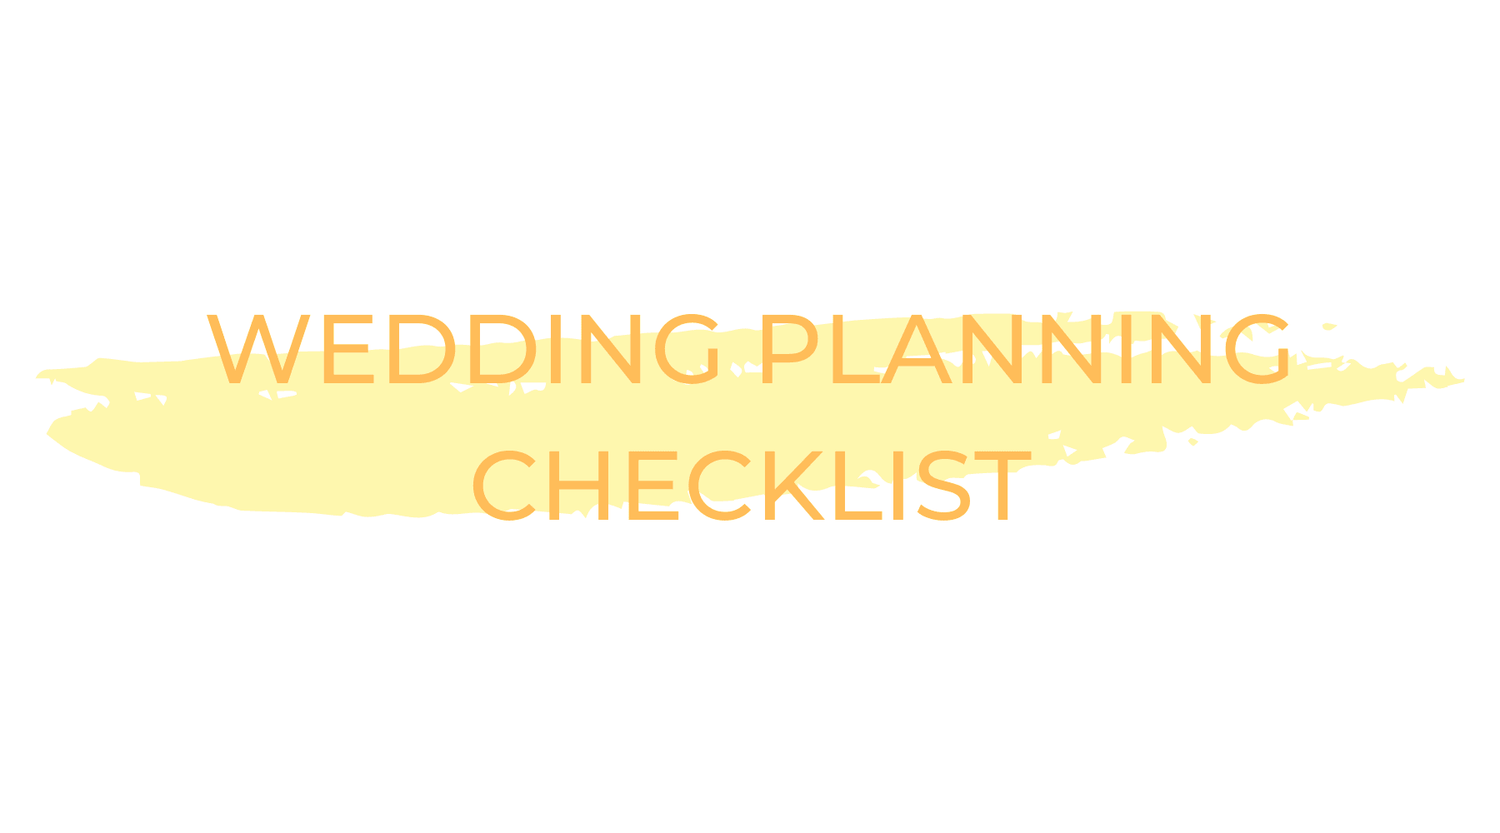 Wedding Planning Checklist - Free Printable PDF - Hoesh International Ltd